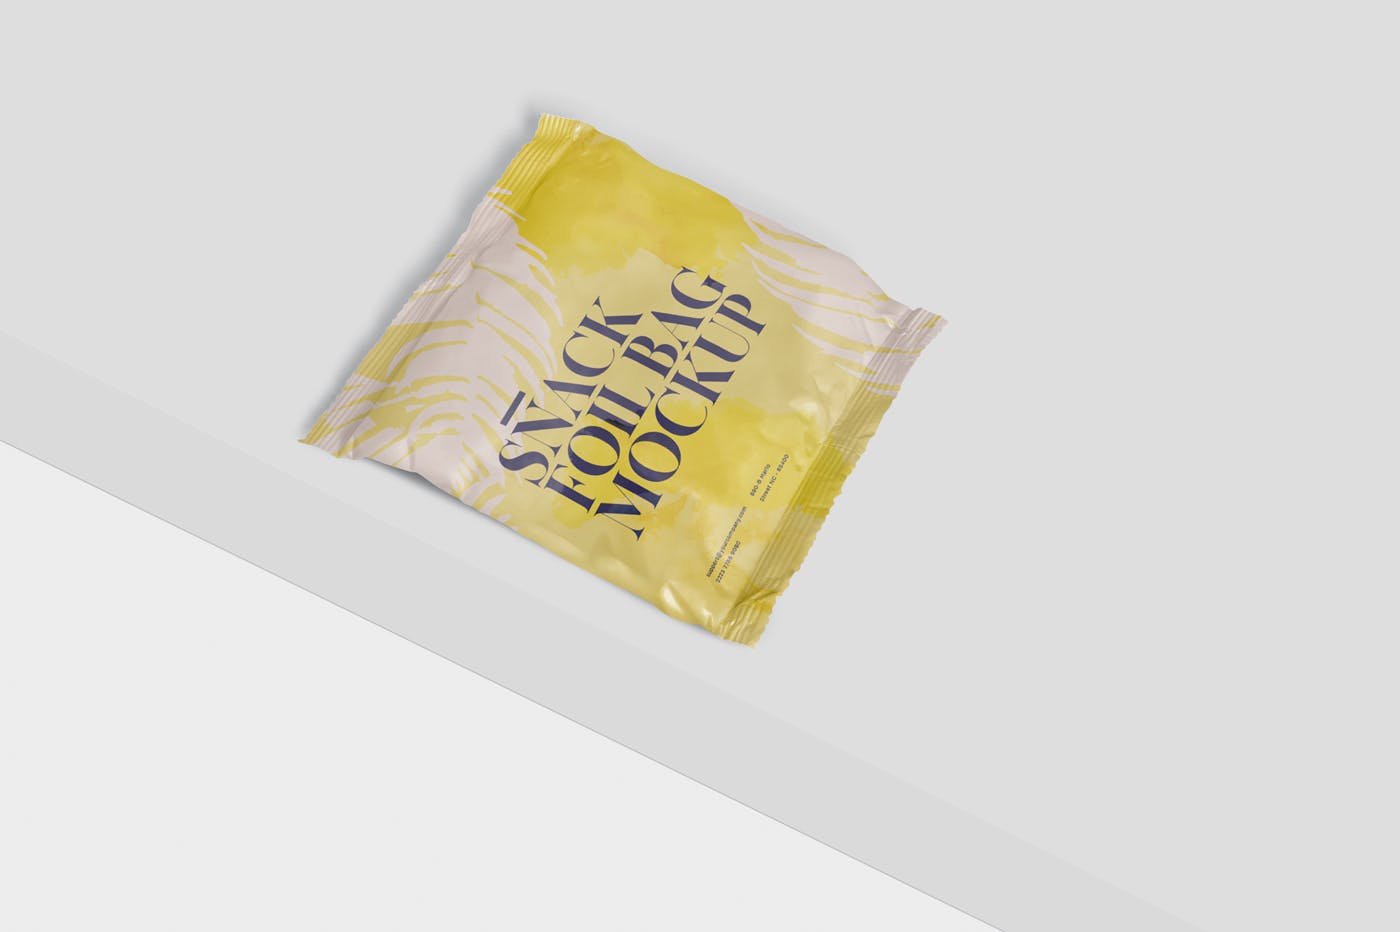 小吃零食铝箔包装袋设计图非凡图库精选 Snack Foil Bag Mockup – Square Size – Small插图(2)